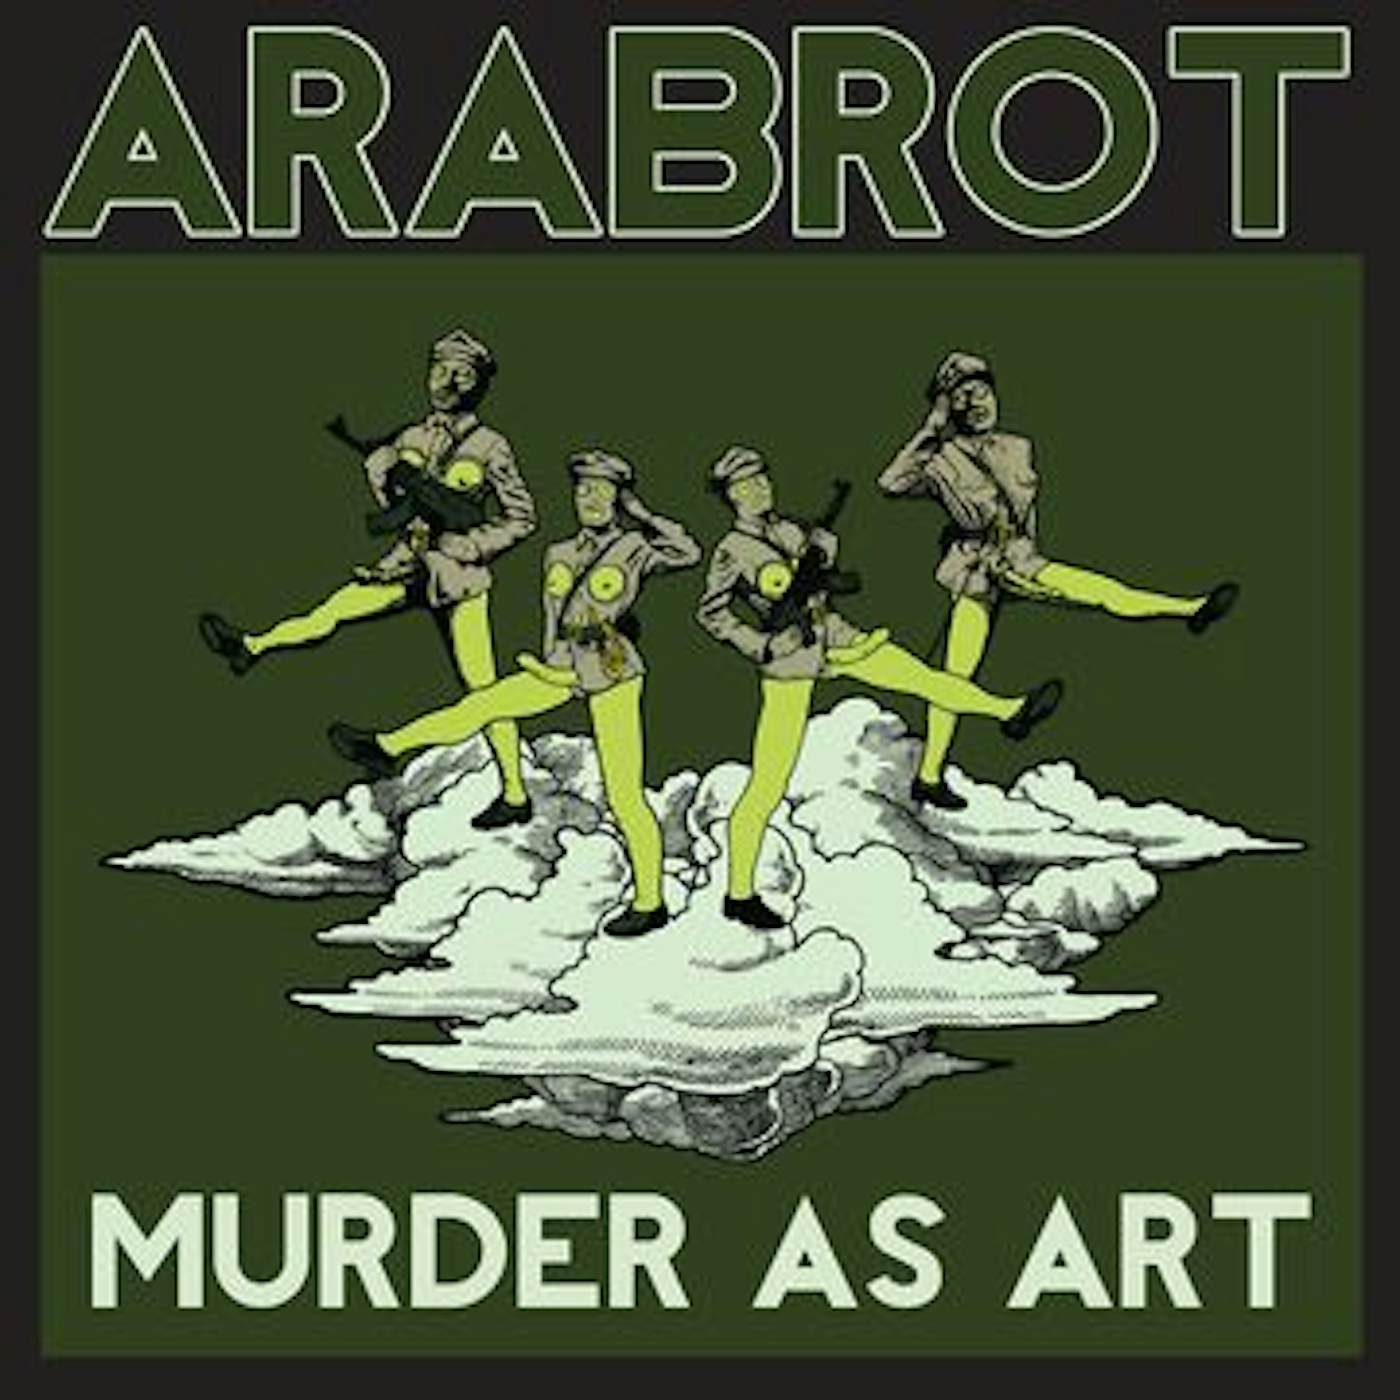 Årabrot Murder as art Vinyl Record